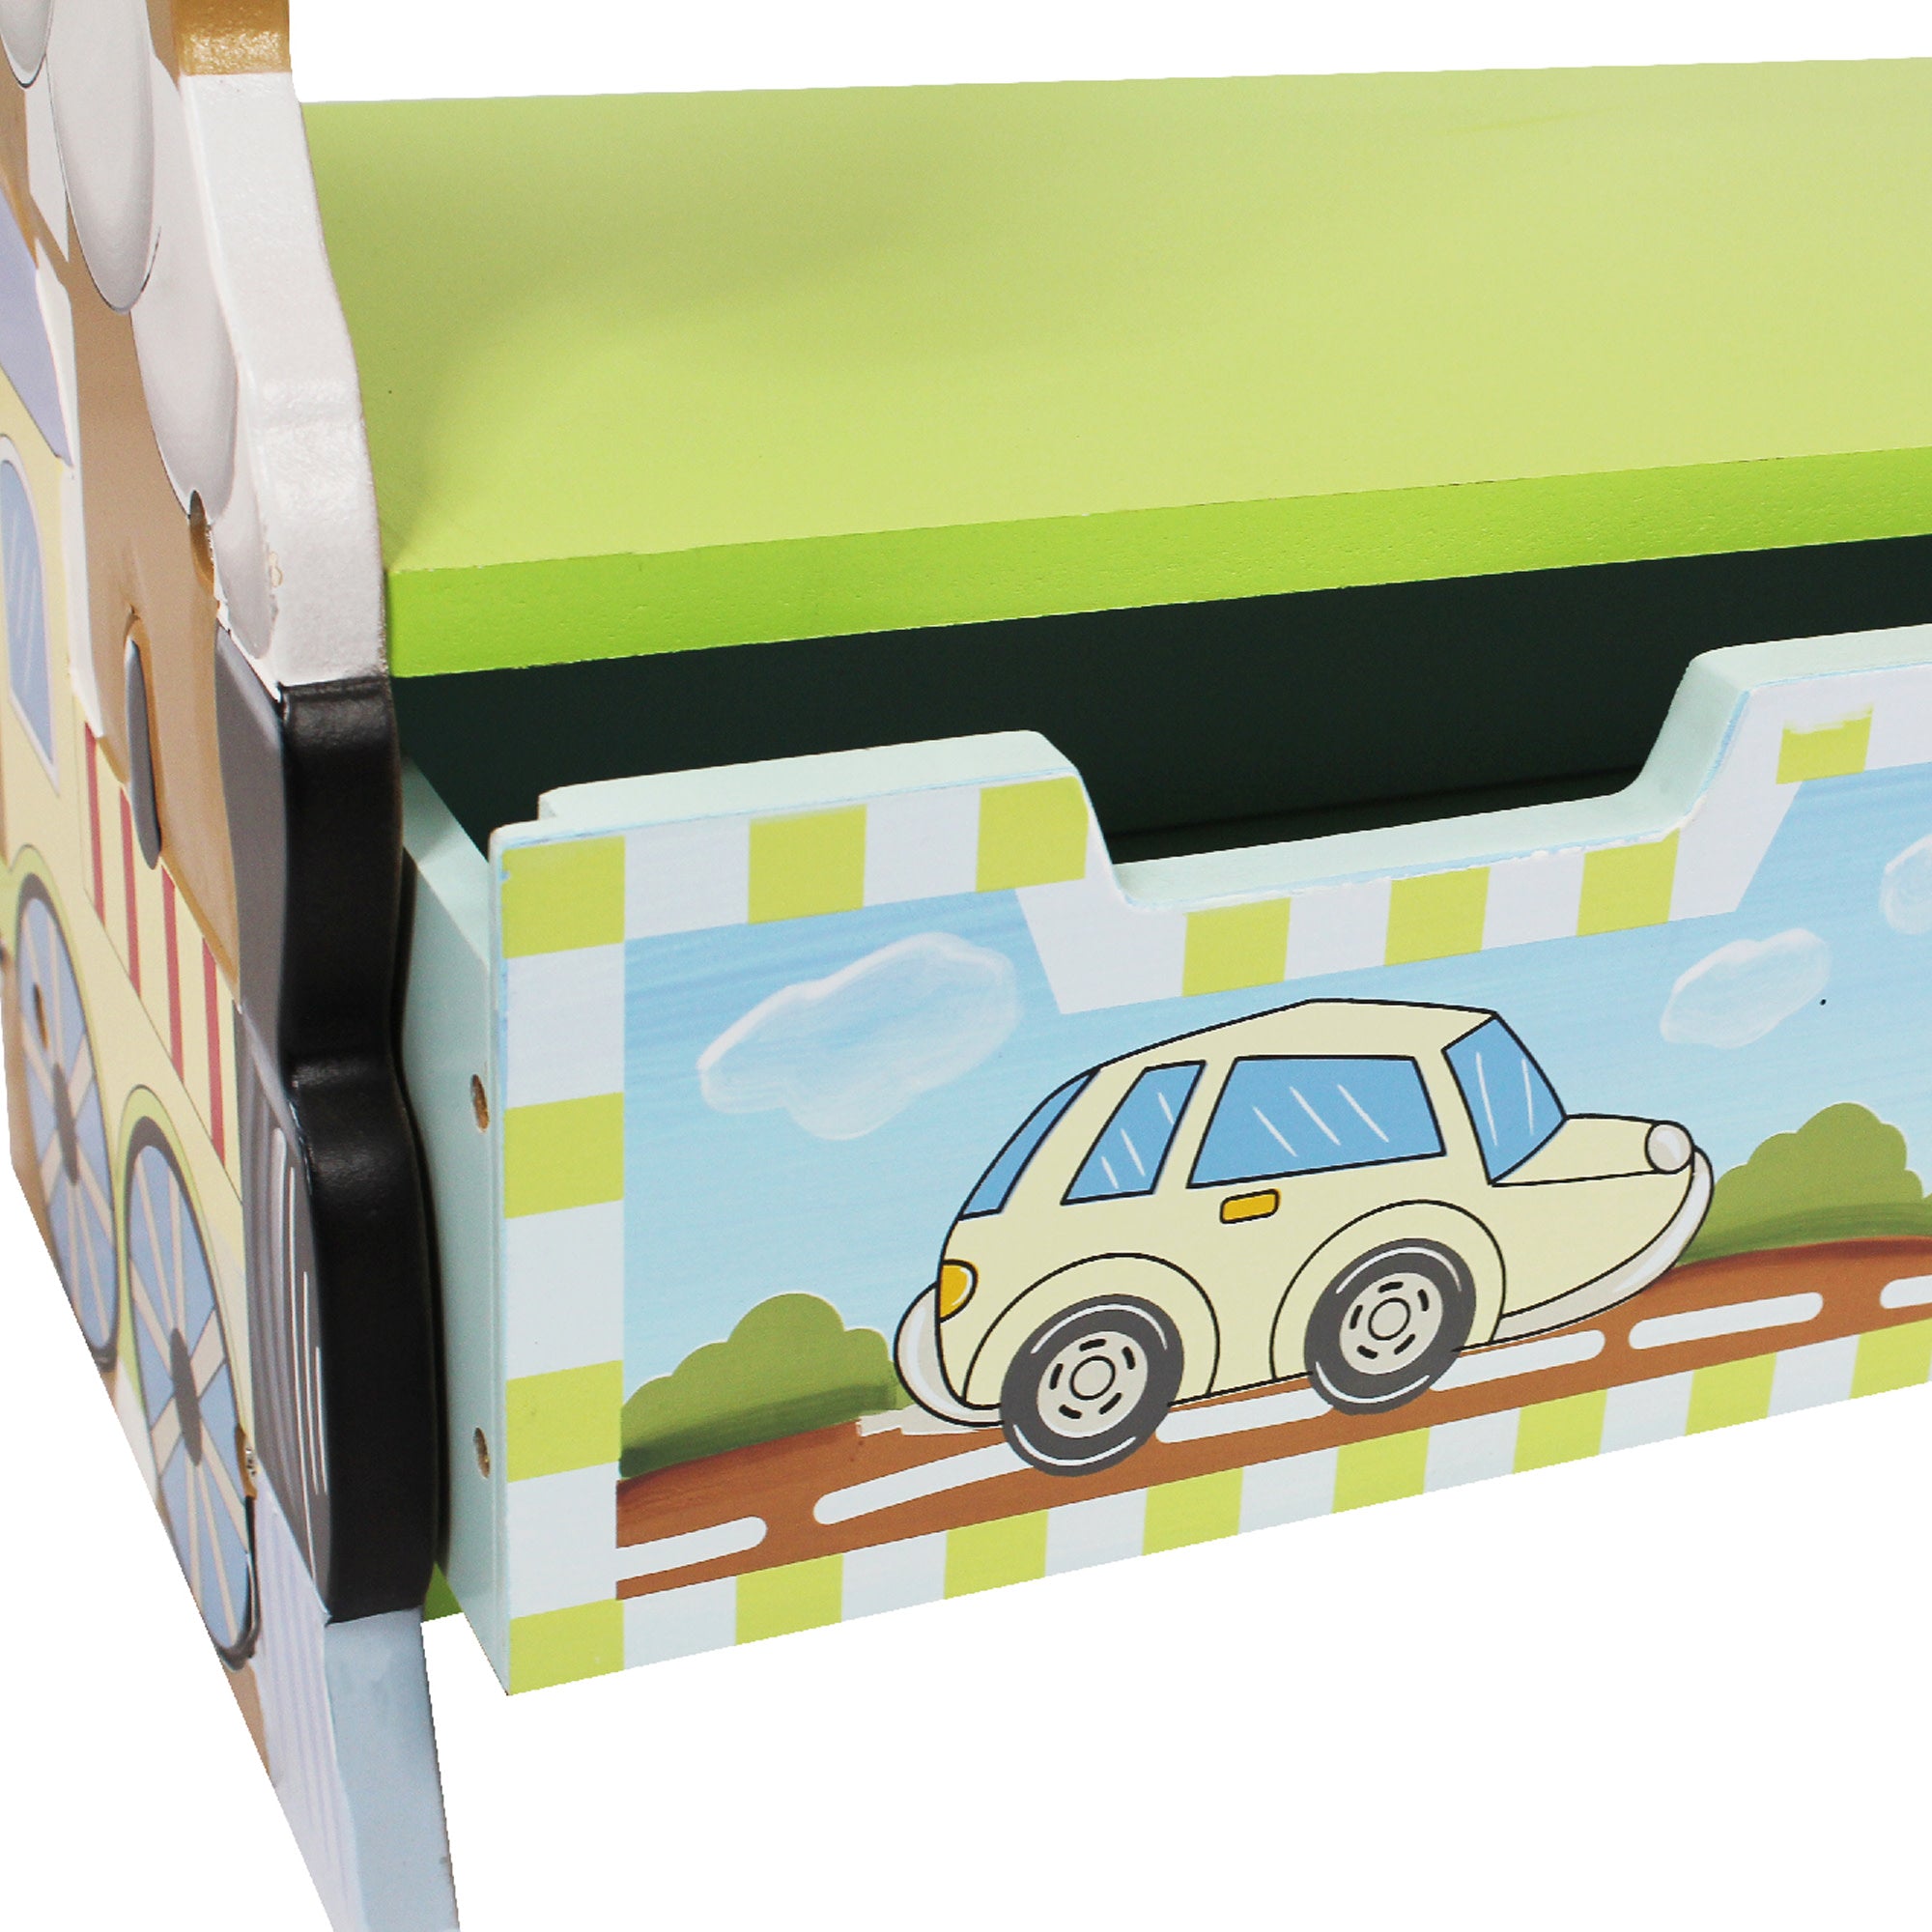 Fantasy Fields Kids Transportation Themed Wooden Bookshelf with Storage Drawer, Multicolor